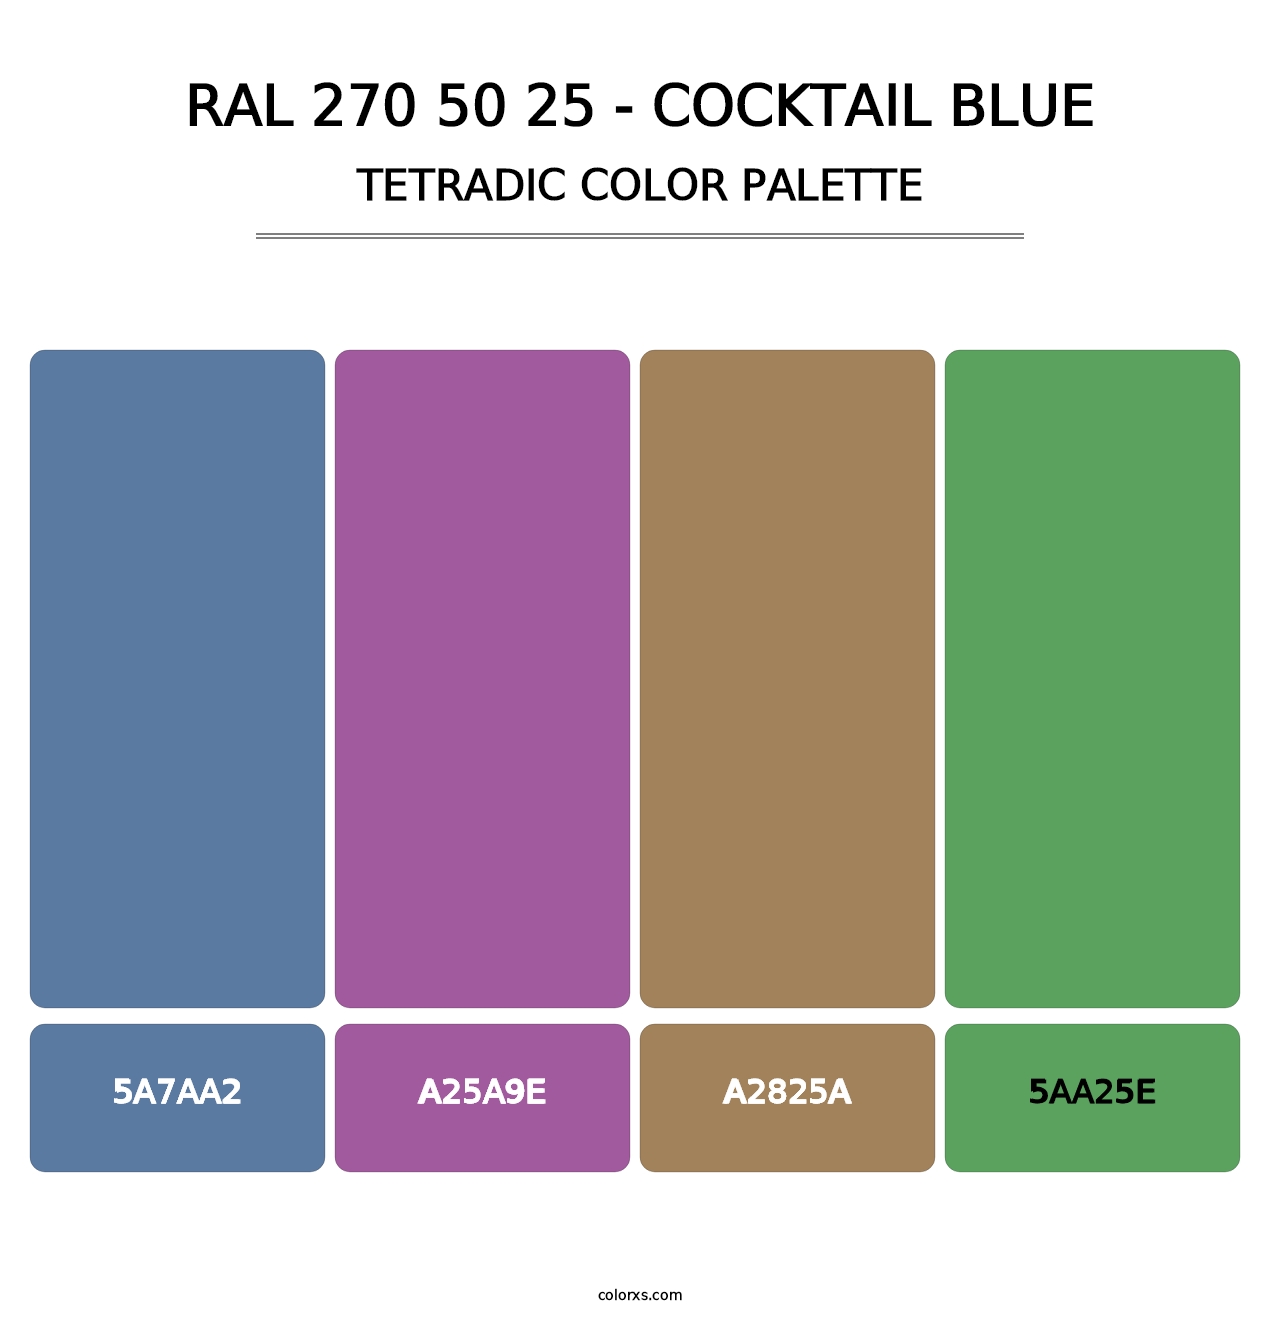 RAL 270 50 25 - Cocktail Blue - Tetradic Color Palette